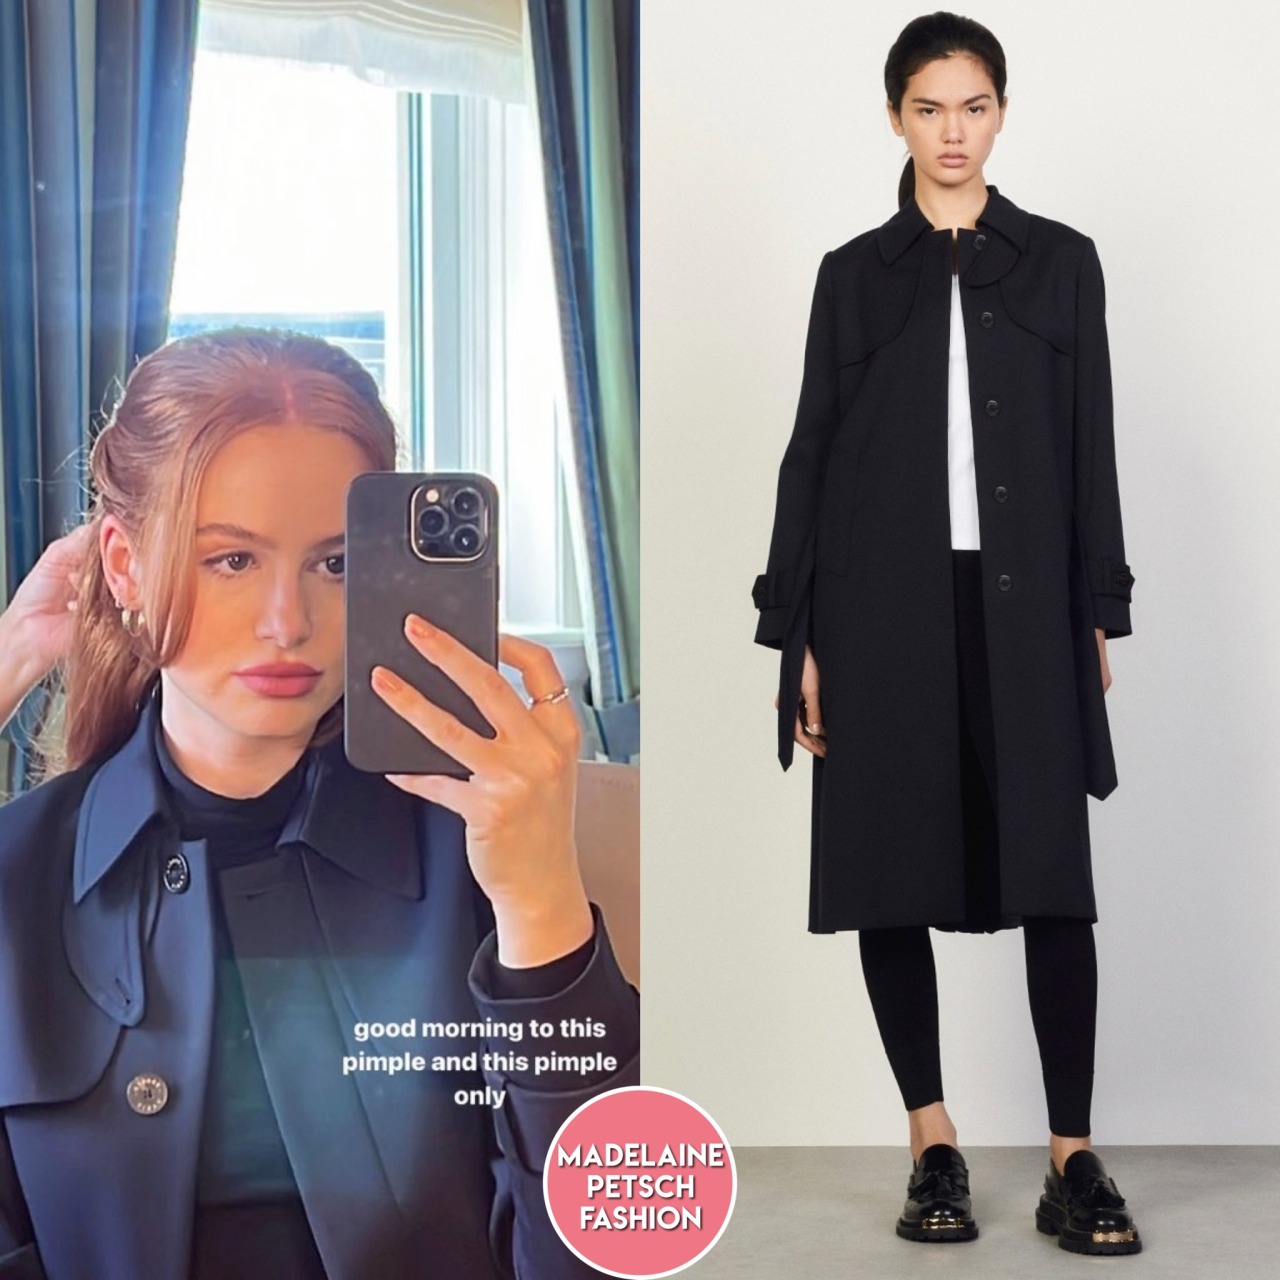 Madelaine Petsch Fashion — Instagram Stories. Madelaine wore her